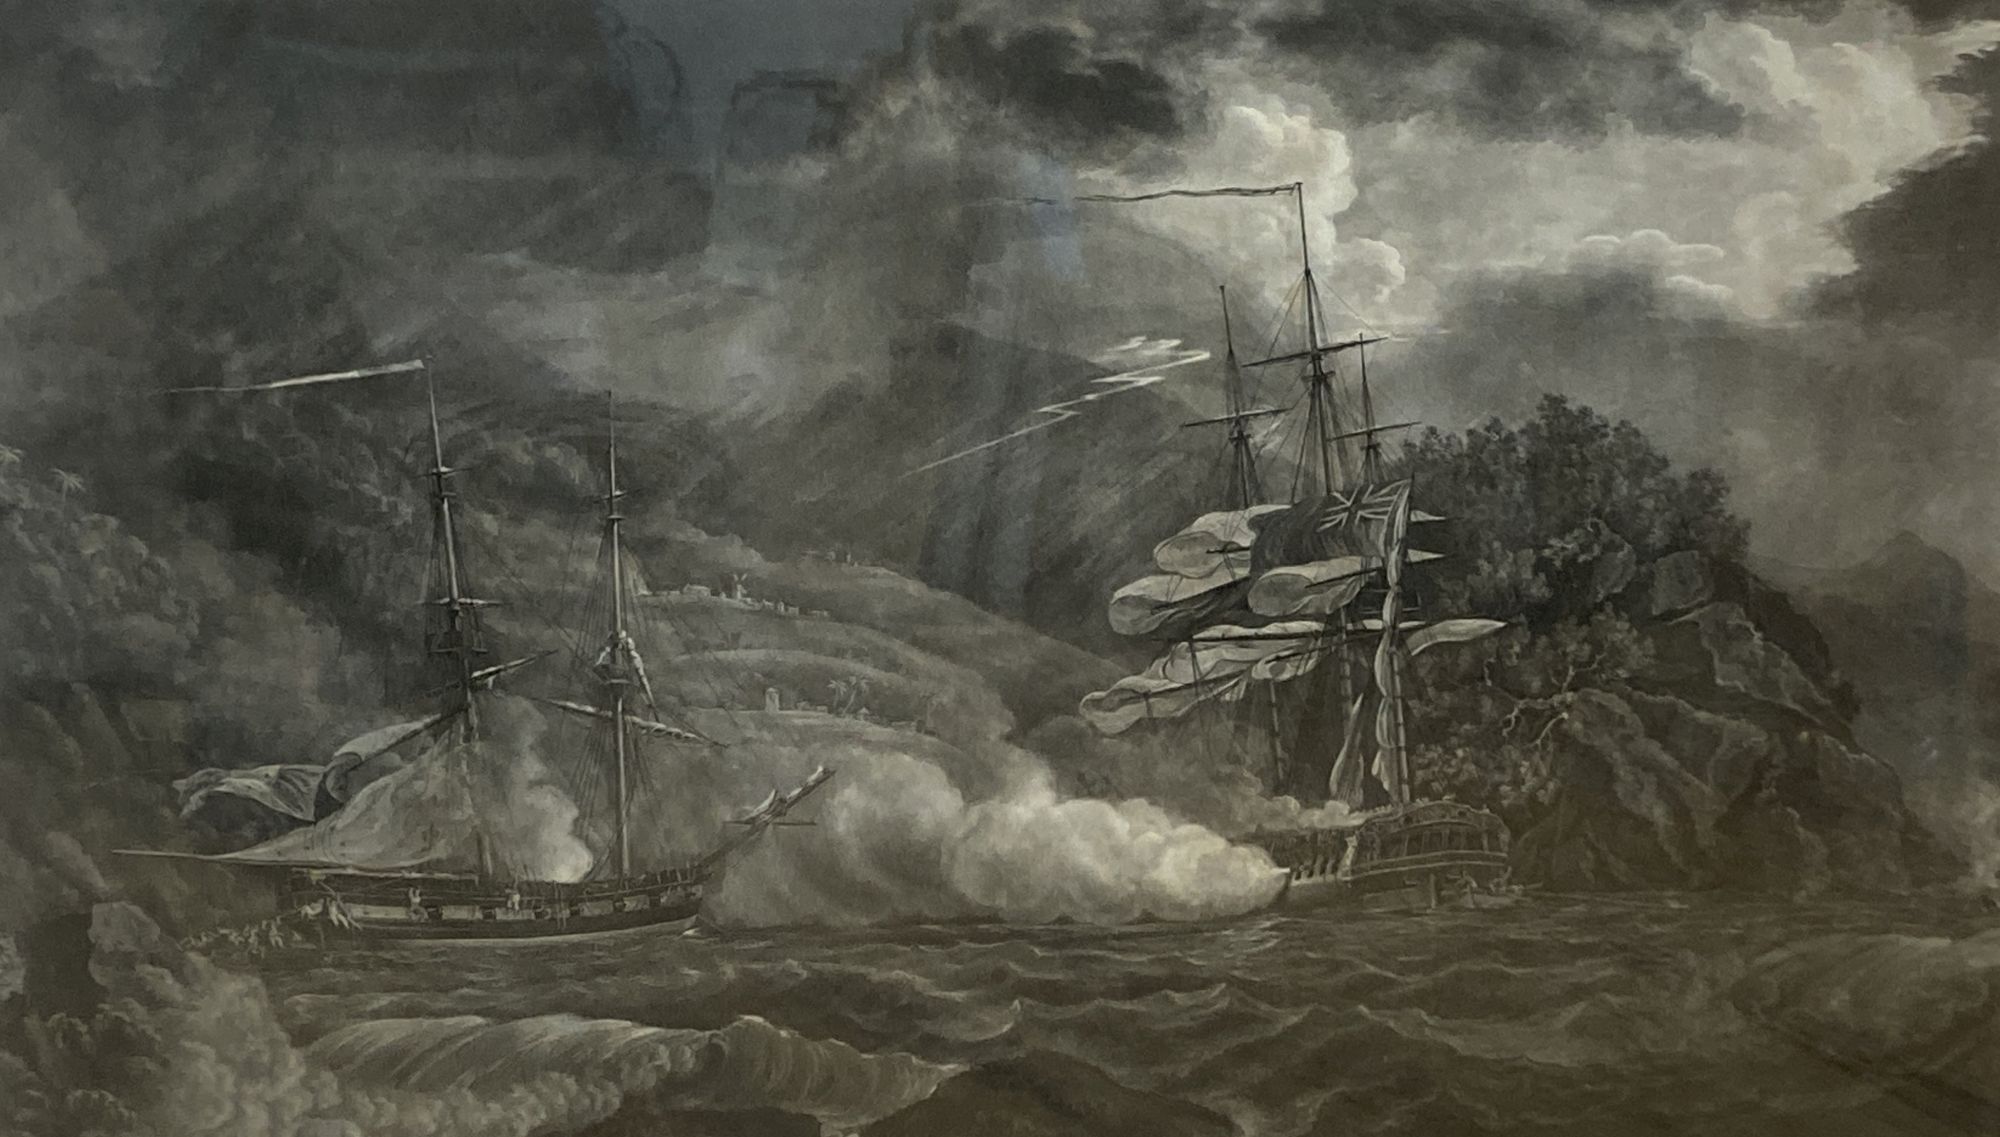 Pollard after Pocock, aquatint, Action off Grenada, between The Mermaid and Brutus 1795, 49 x 73cm